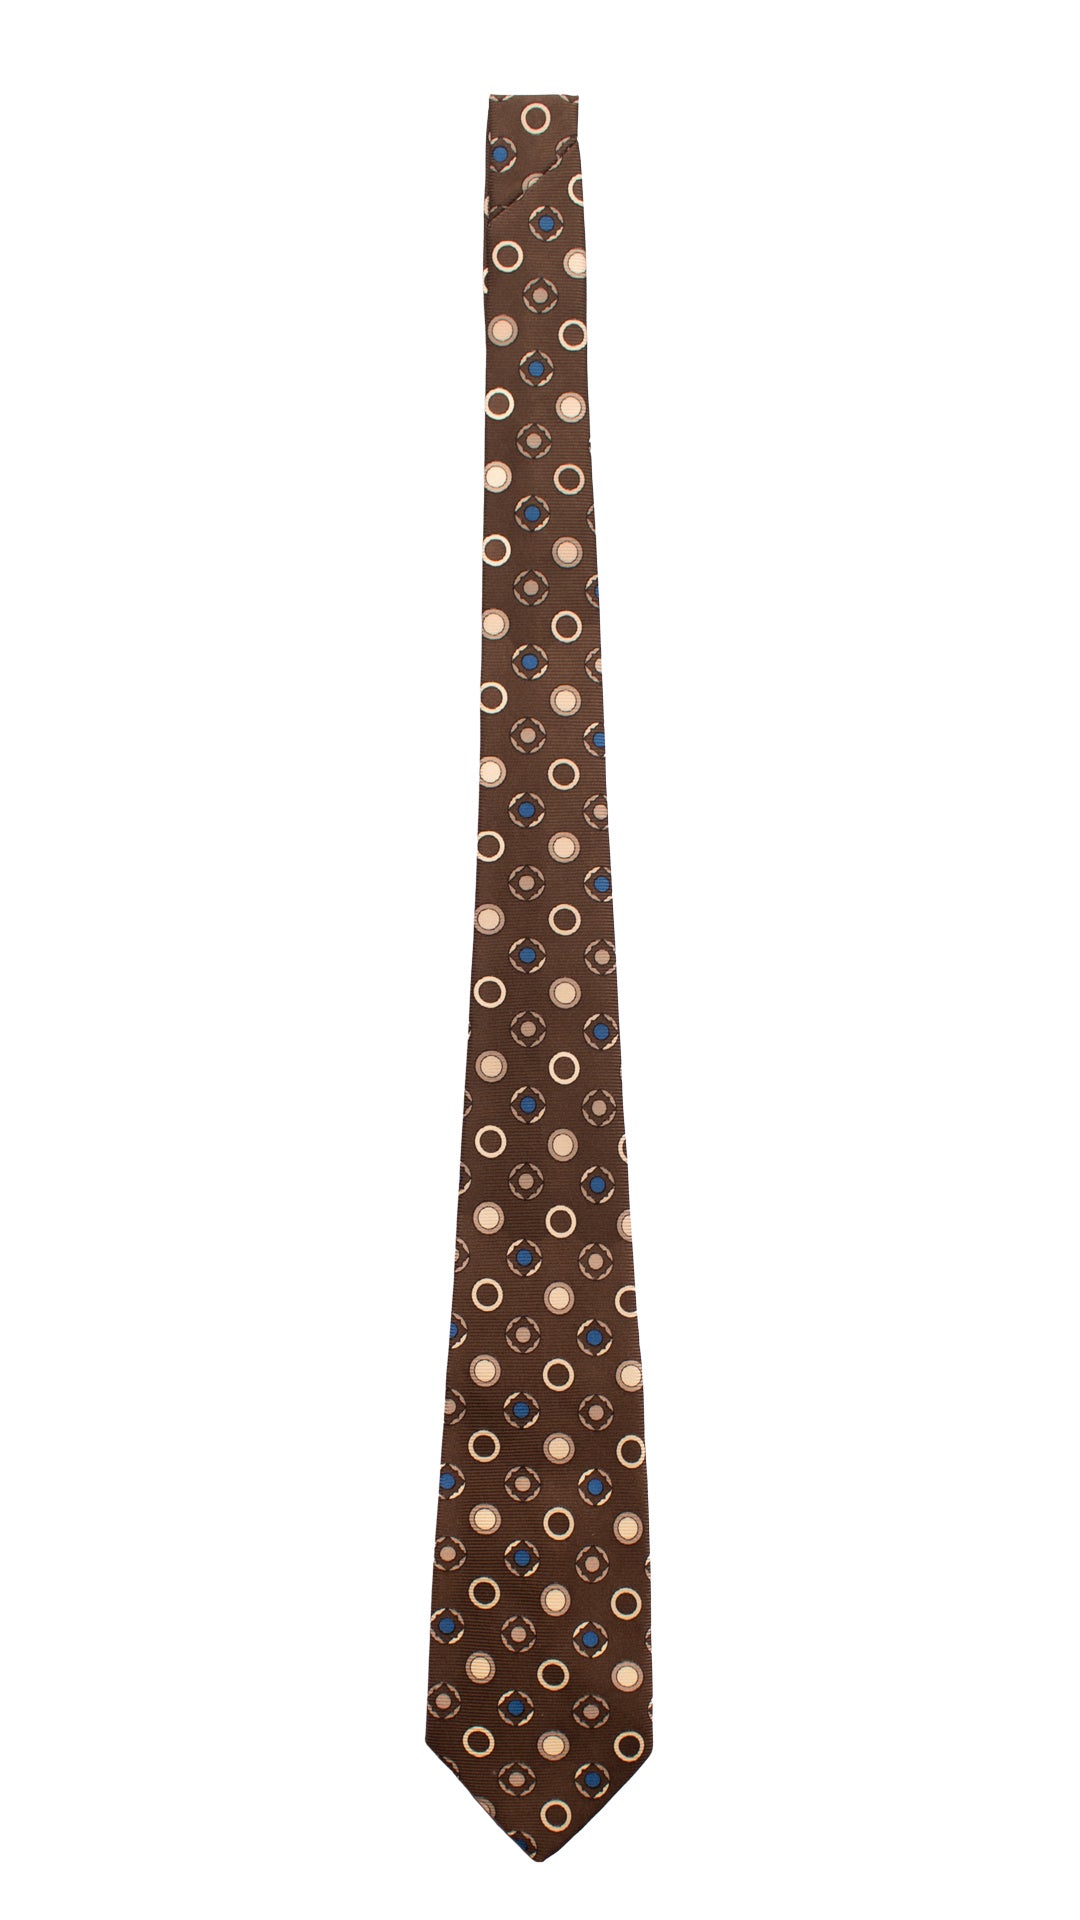 Cravatta Vintage in Saia di Seta Marrone Fantasia Blu Avorio Color Corda CV815 Intera